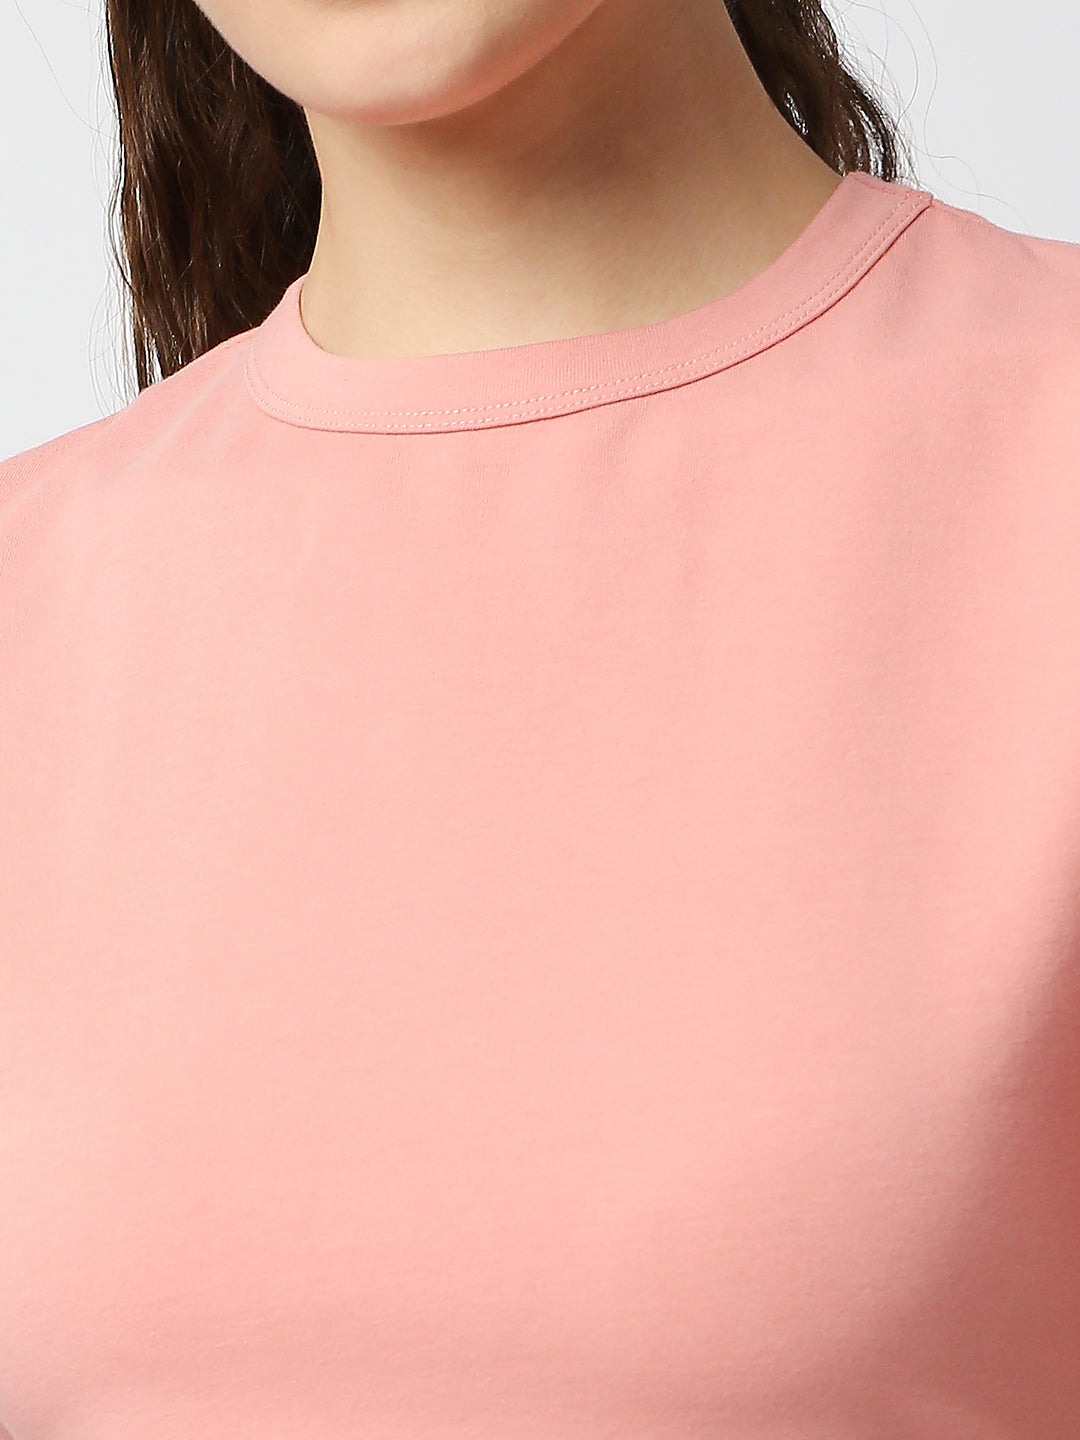 Buy Blamblack Women's Plain Peach color Half sleeves and Short Set